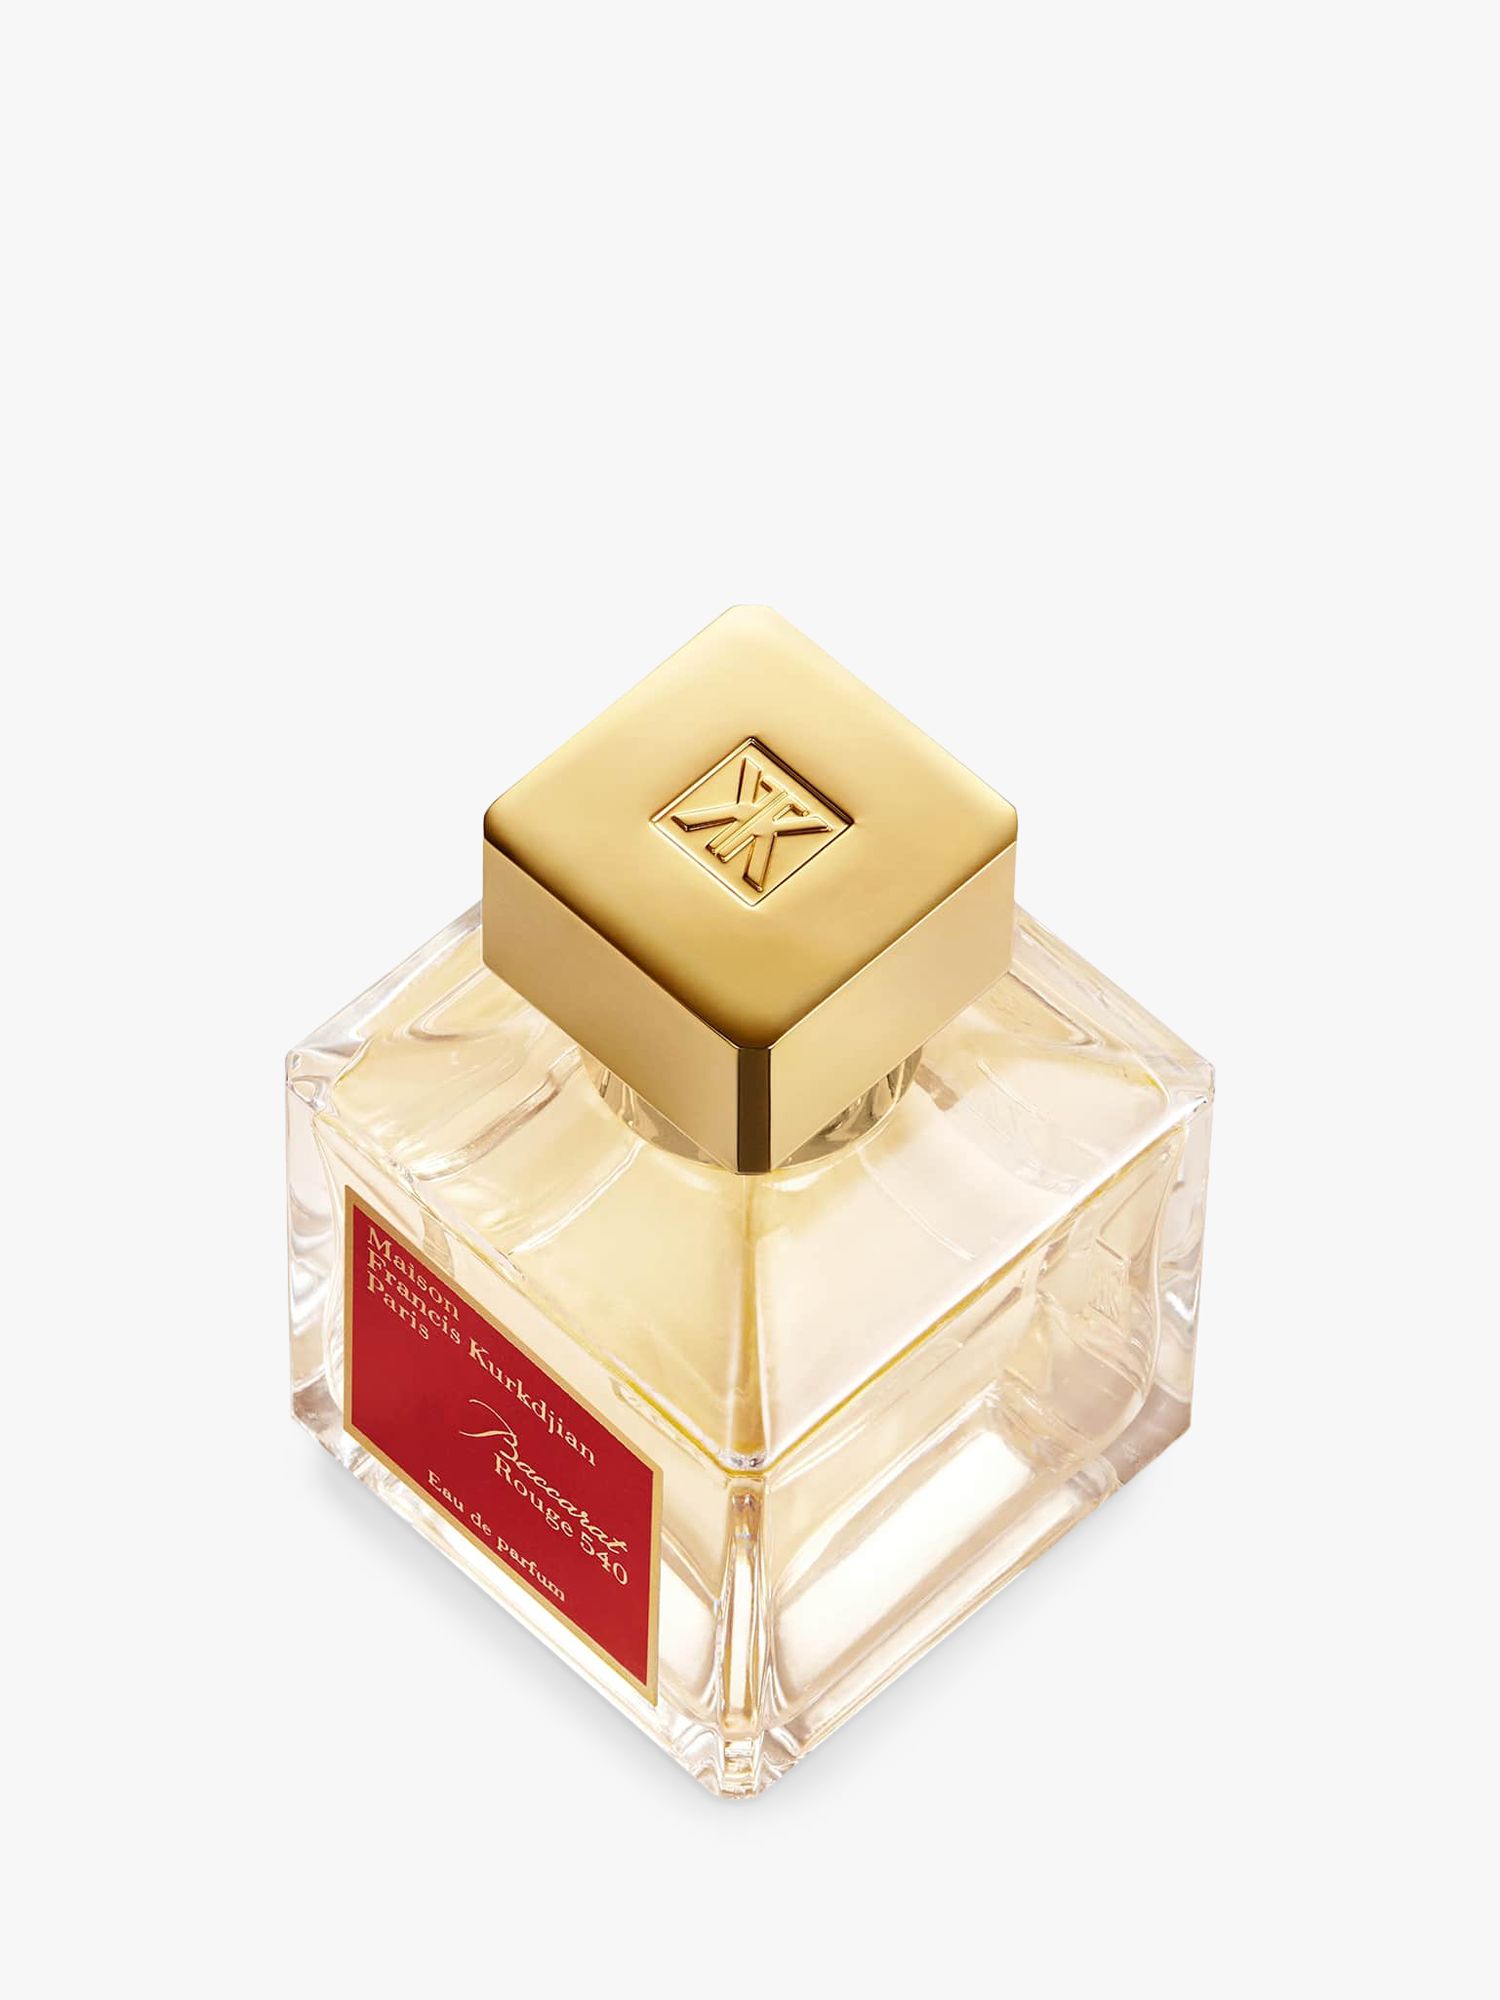 Maison Francis Kurkdjian Baccarat Rouge 540 Eau de Parfum, 70ml